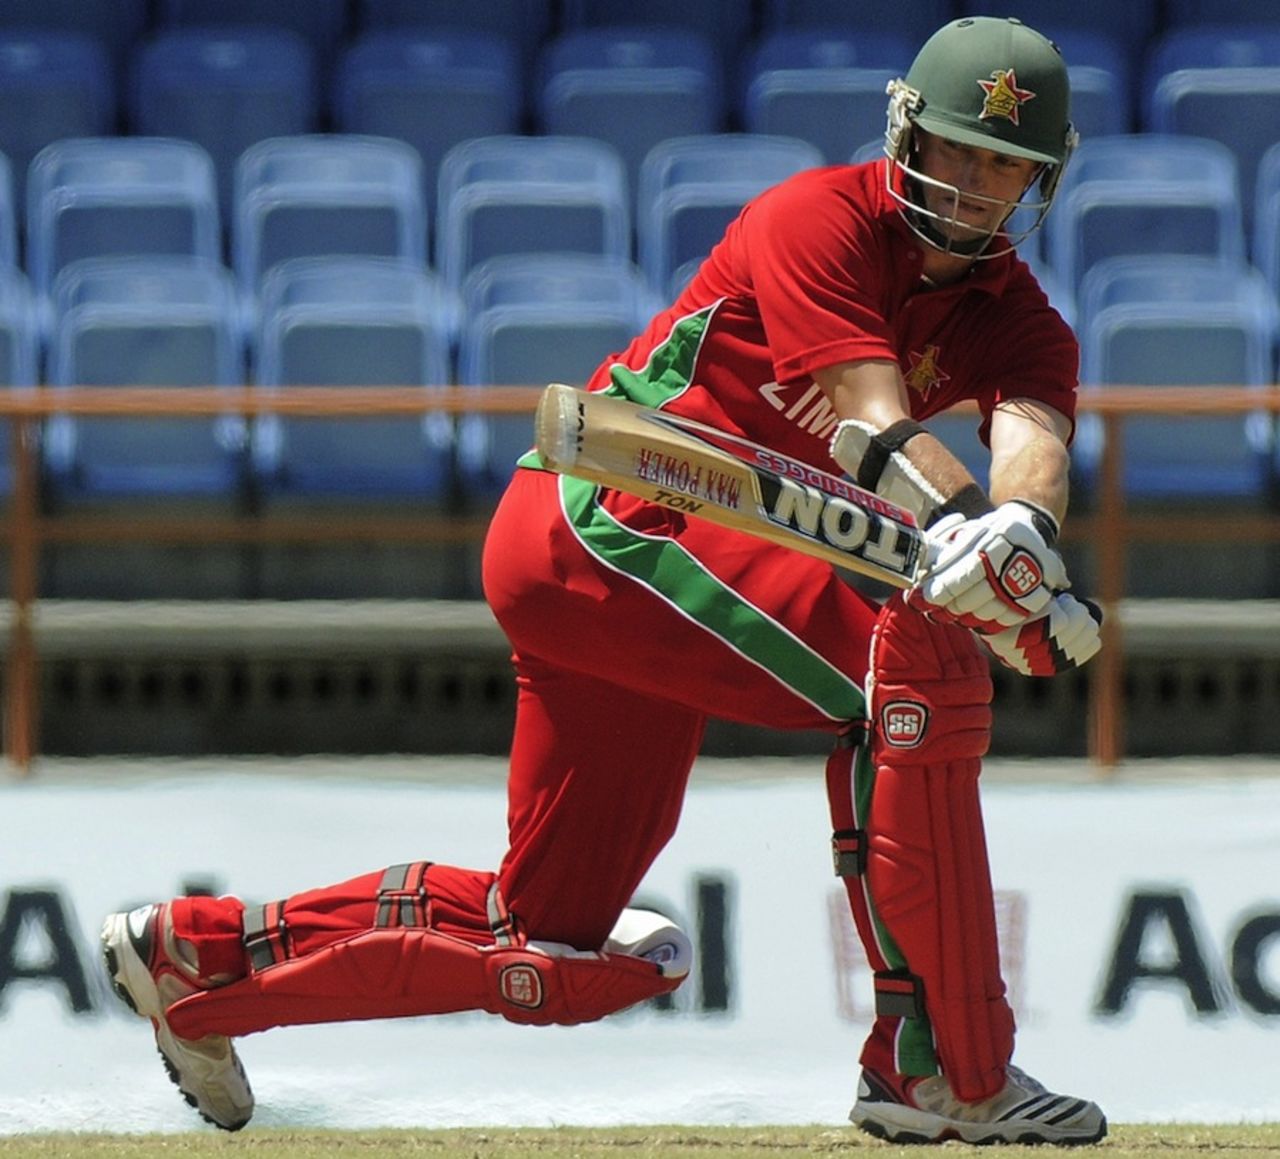 Craig Ervine sweeps during his innings of 80, West Indies v Zimbabwe, 2nd ODI, Grenada, February 24, 2013